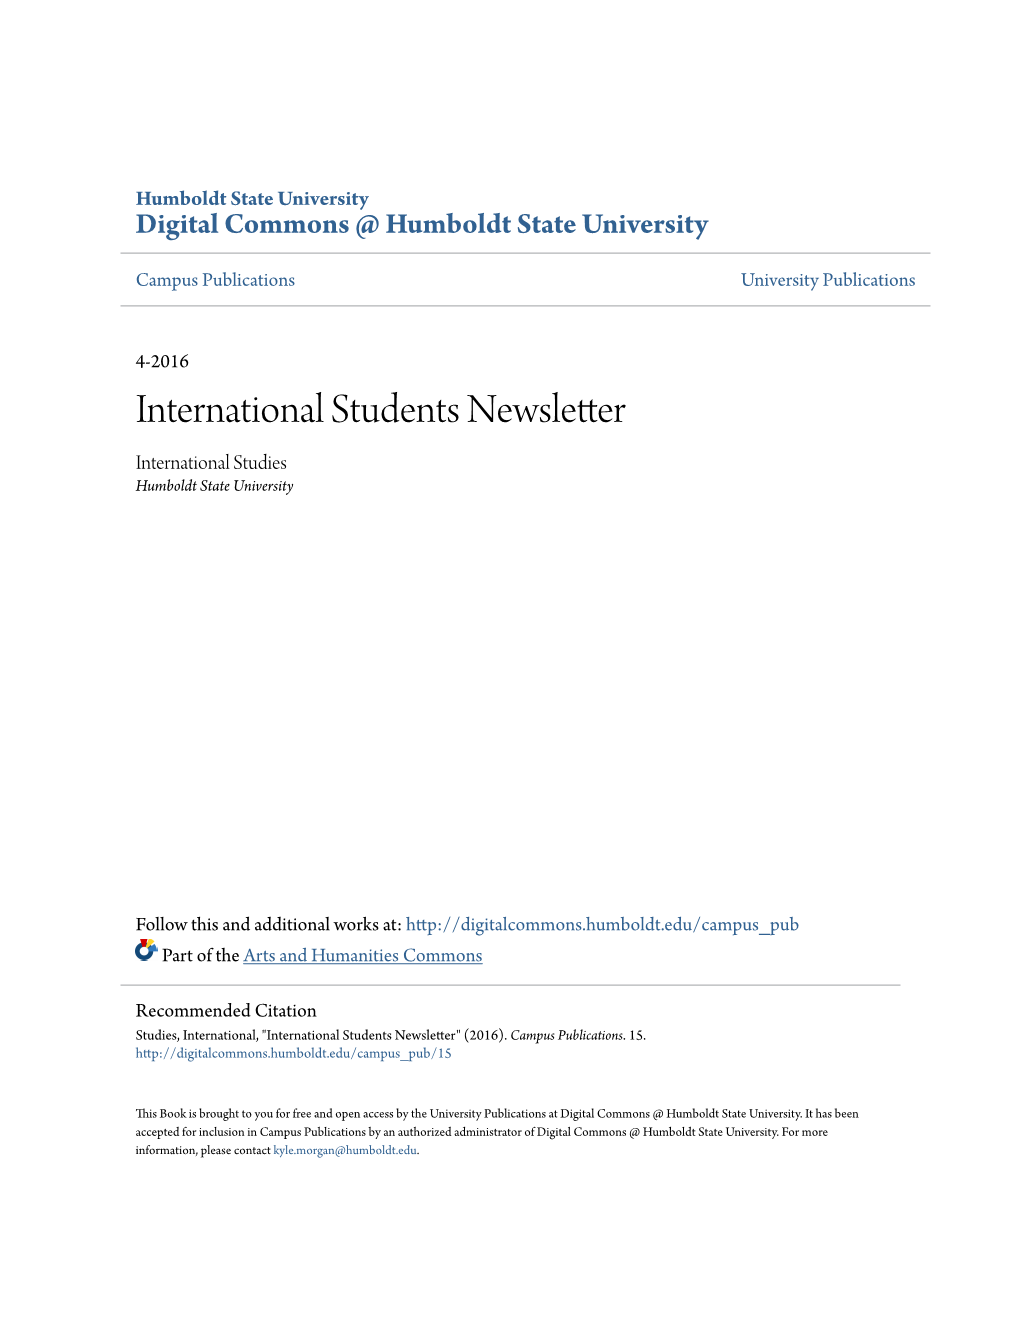 International Students Newsletter International Studies Humboldt State University